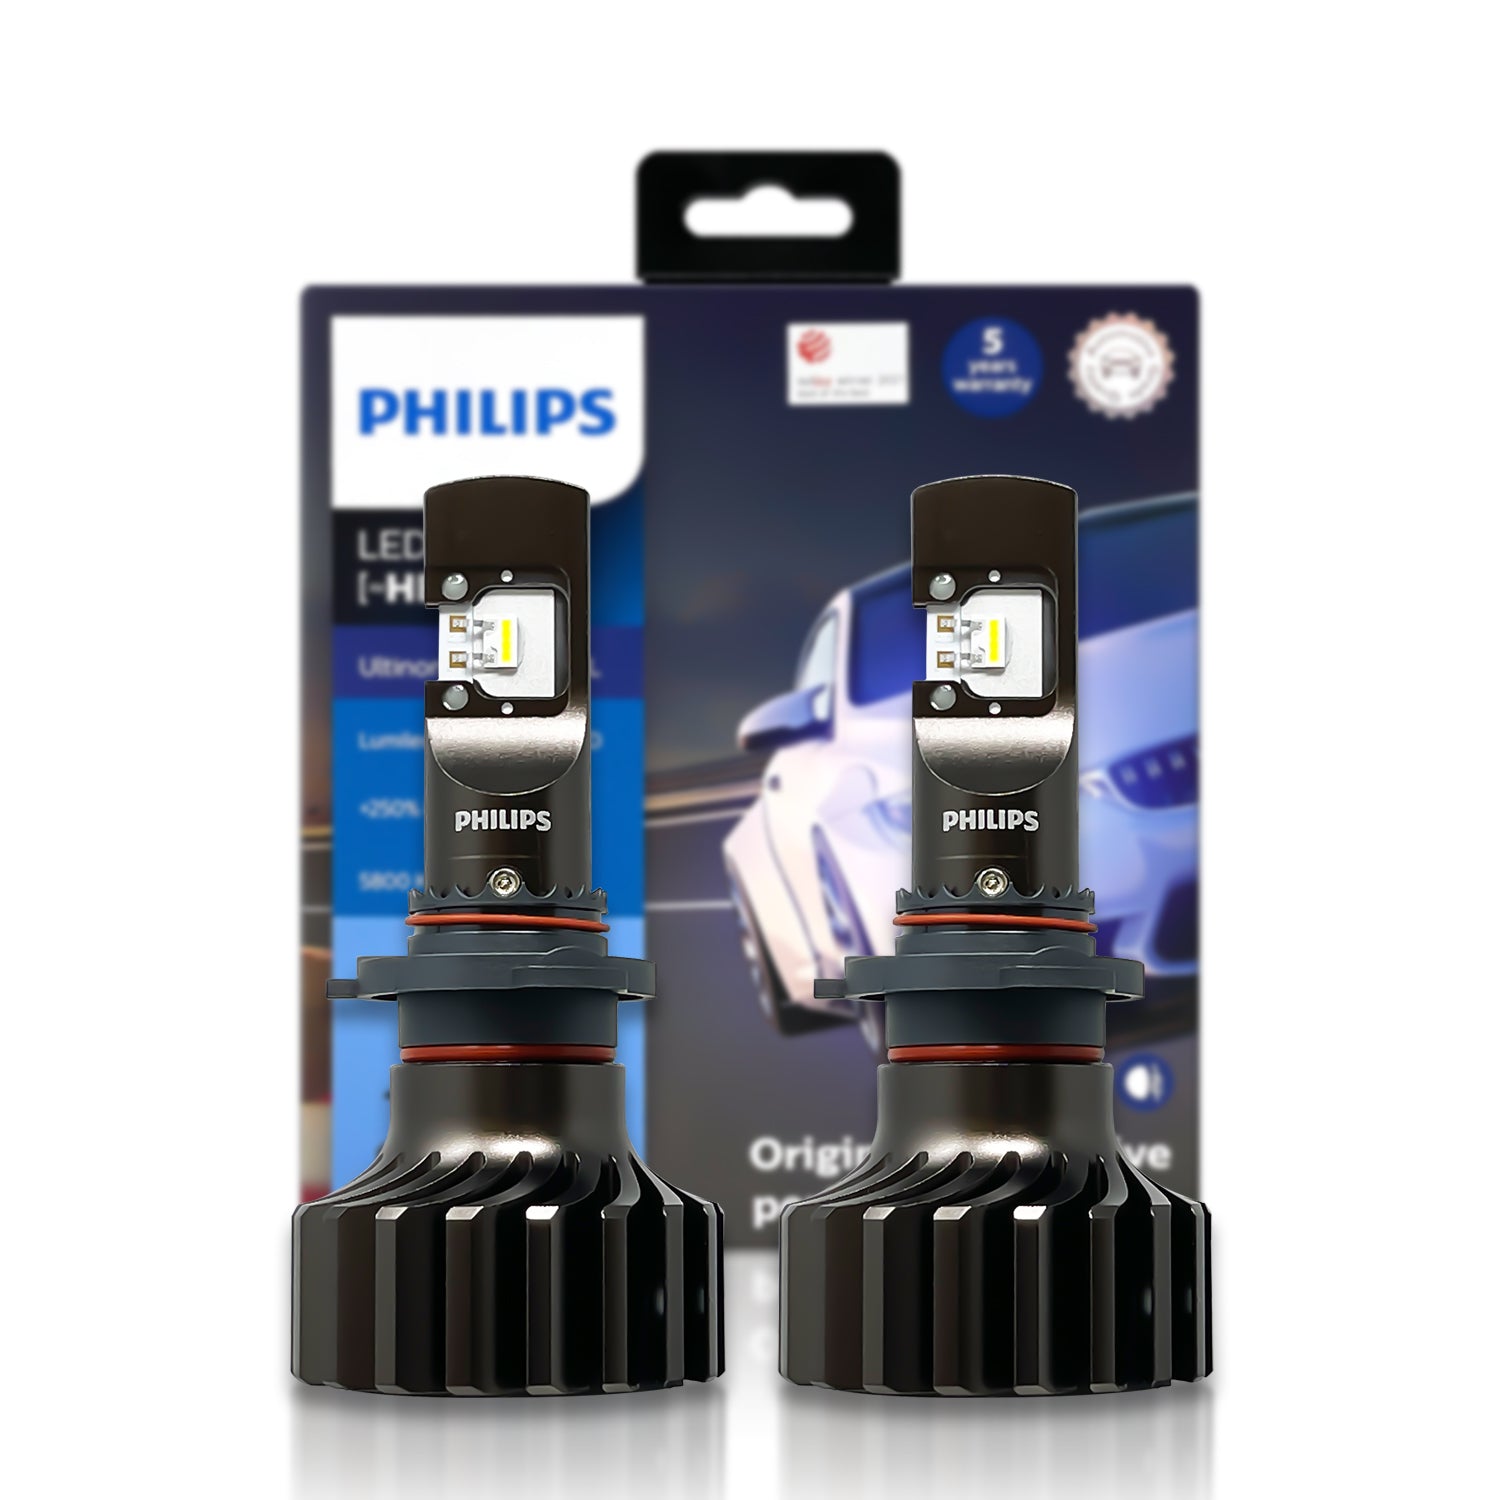 H7: Philips 11972U6000X2 Ultinon PRO6000 LED Bulbs – HID CONCEPT